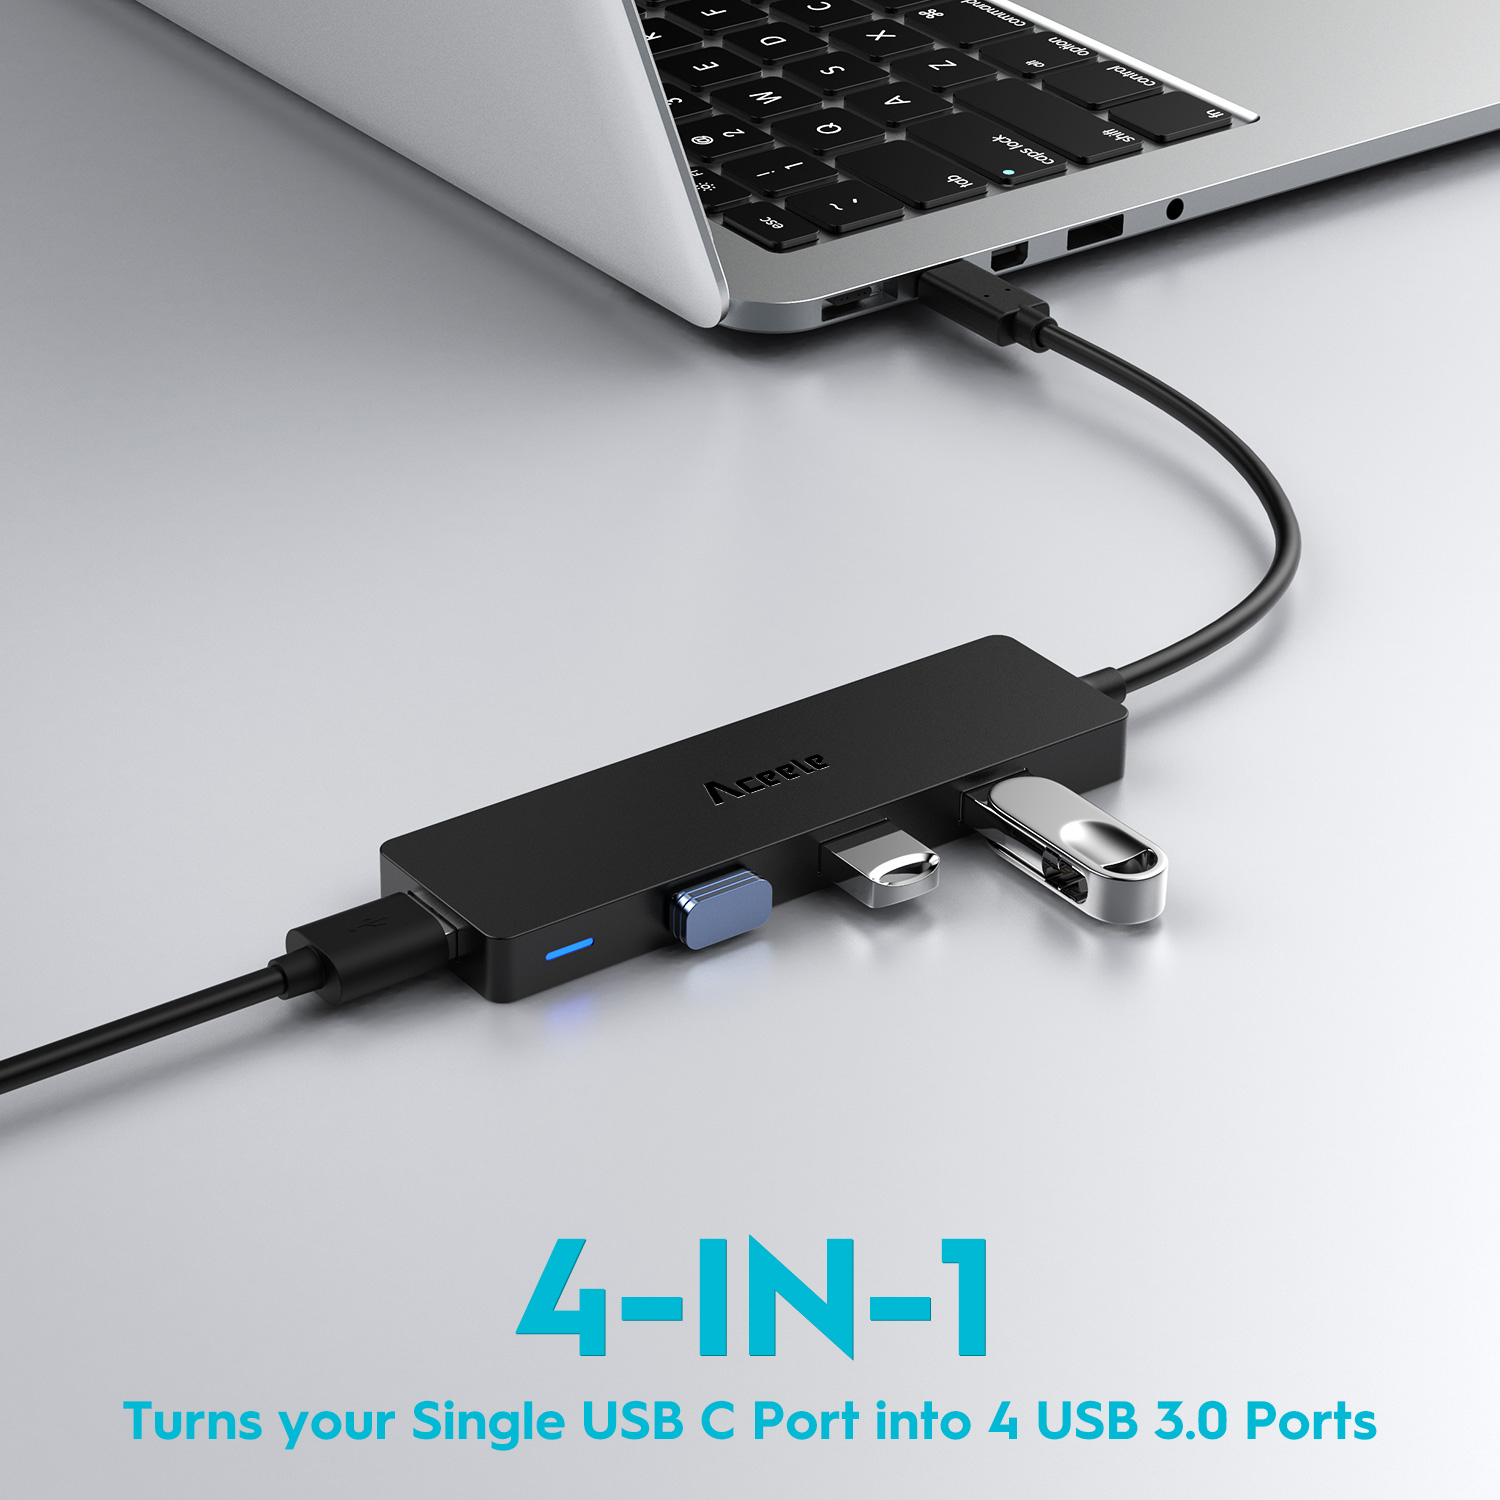 03-90293 Aceele USB C Hub, Extra Slim USB C to 4 Port USB 3.0 Splitter for Thunderbolt 3 MacBook Pro Air 2020 and More Type C 3.1 Laptop